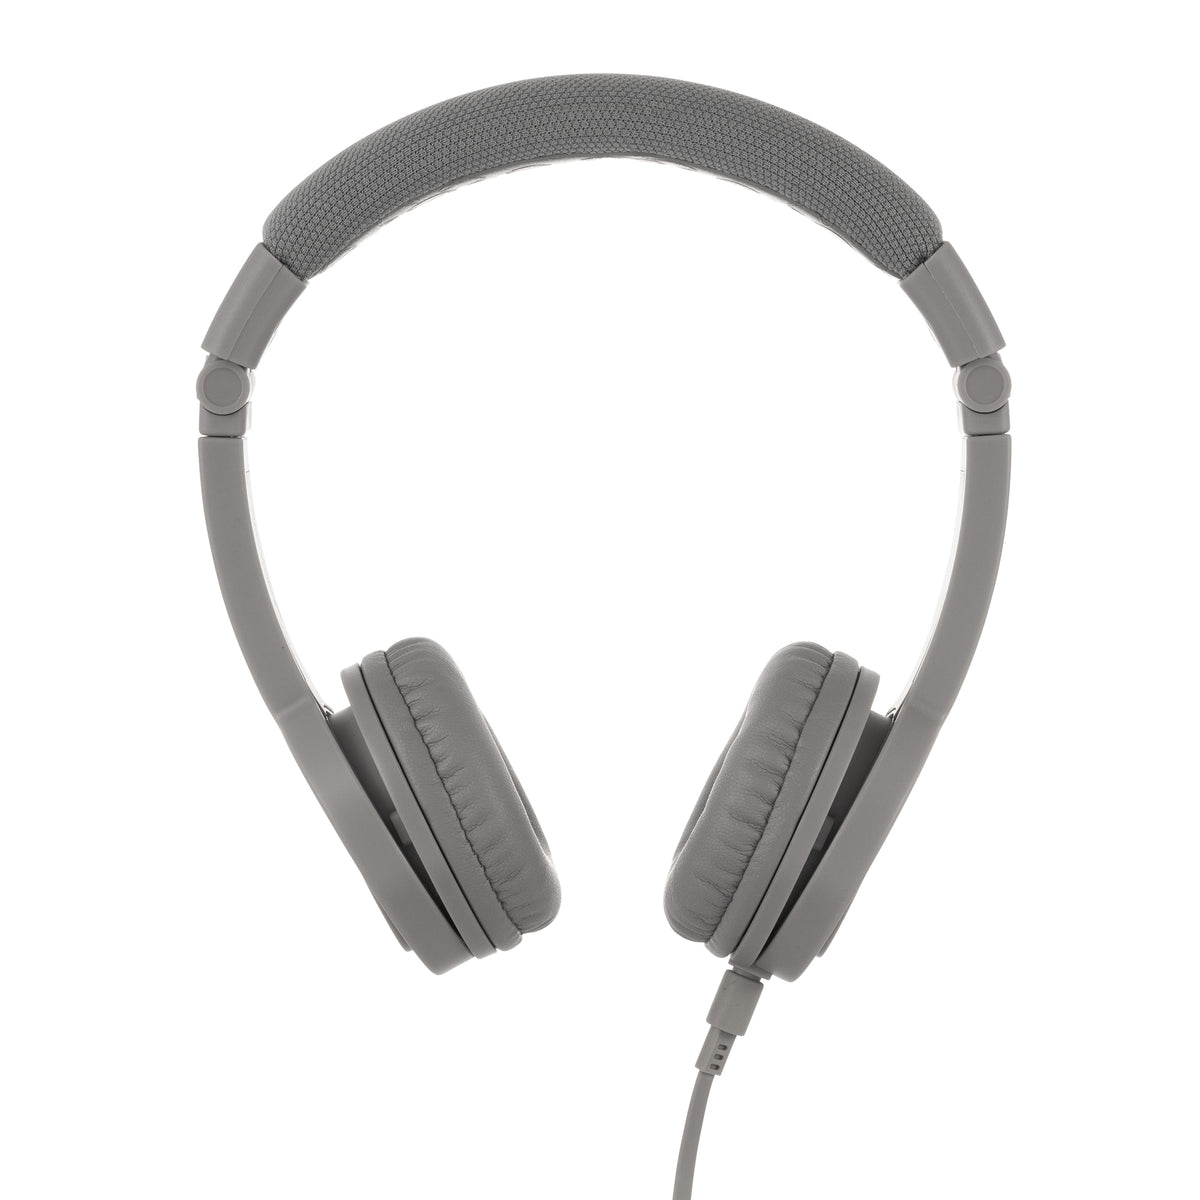 BUDDYPHONES Explore Plus Foldable Headphones with Mic - Gray Matter